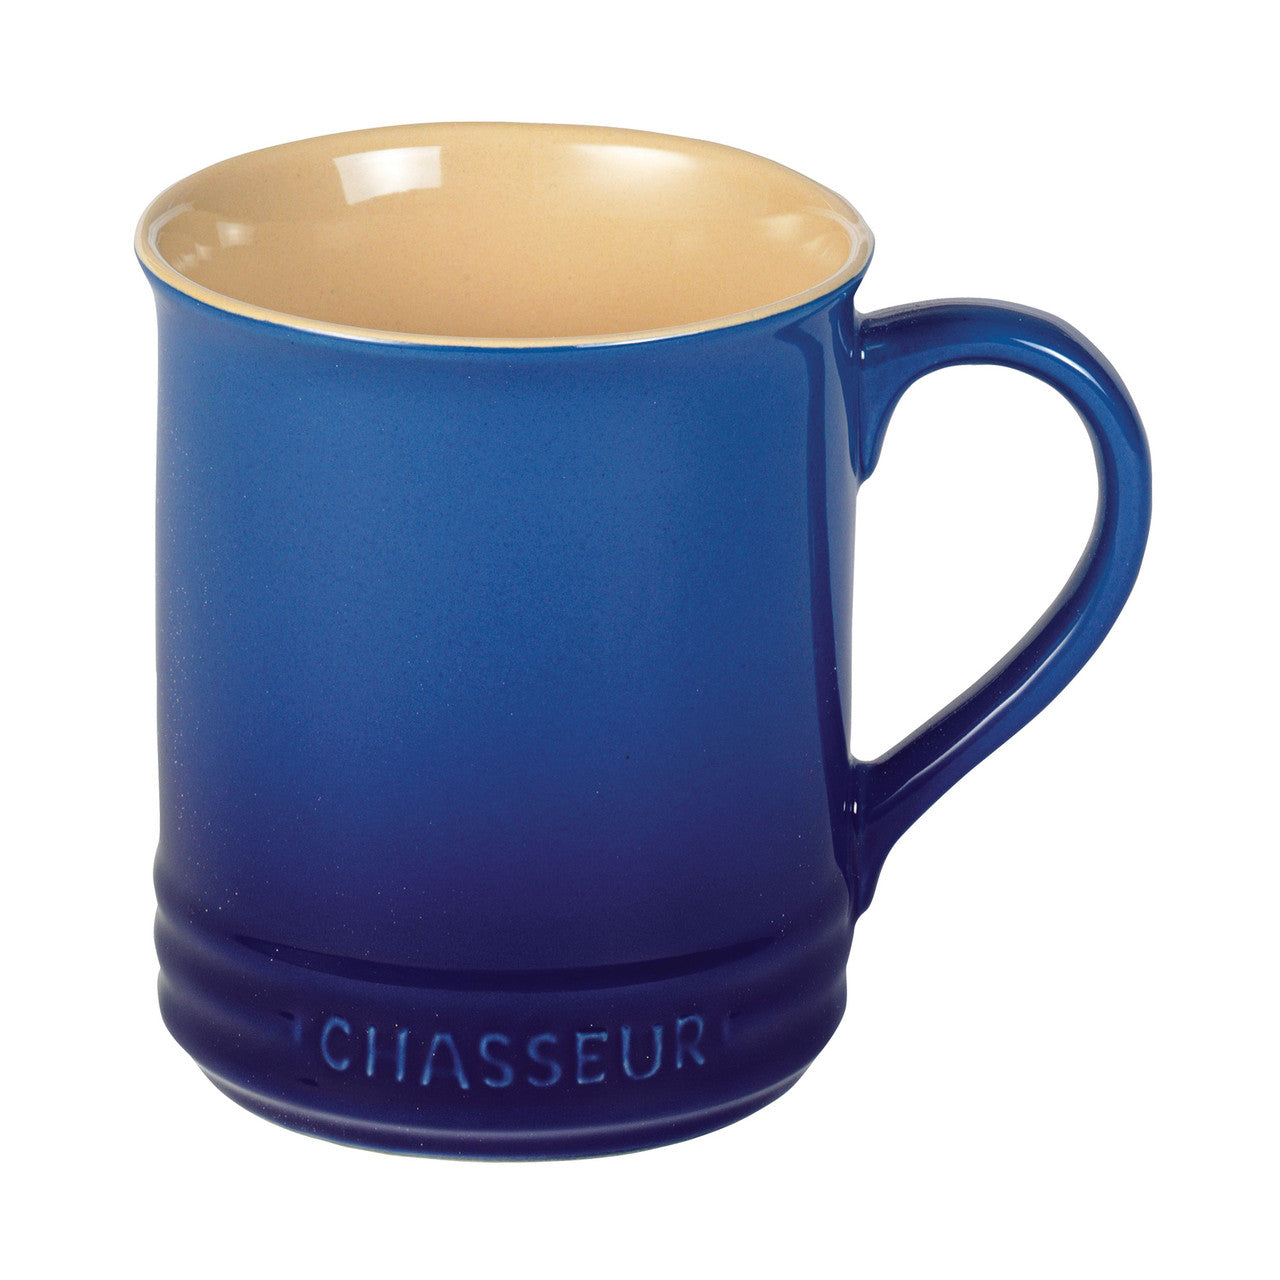 Chasseur - MUG 350ML - BLUE